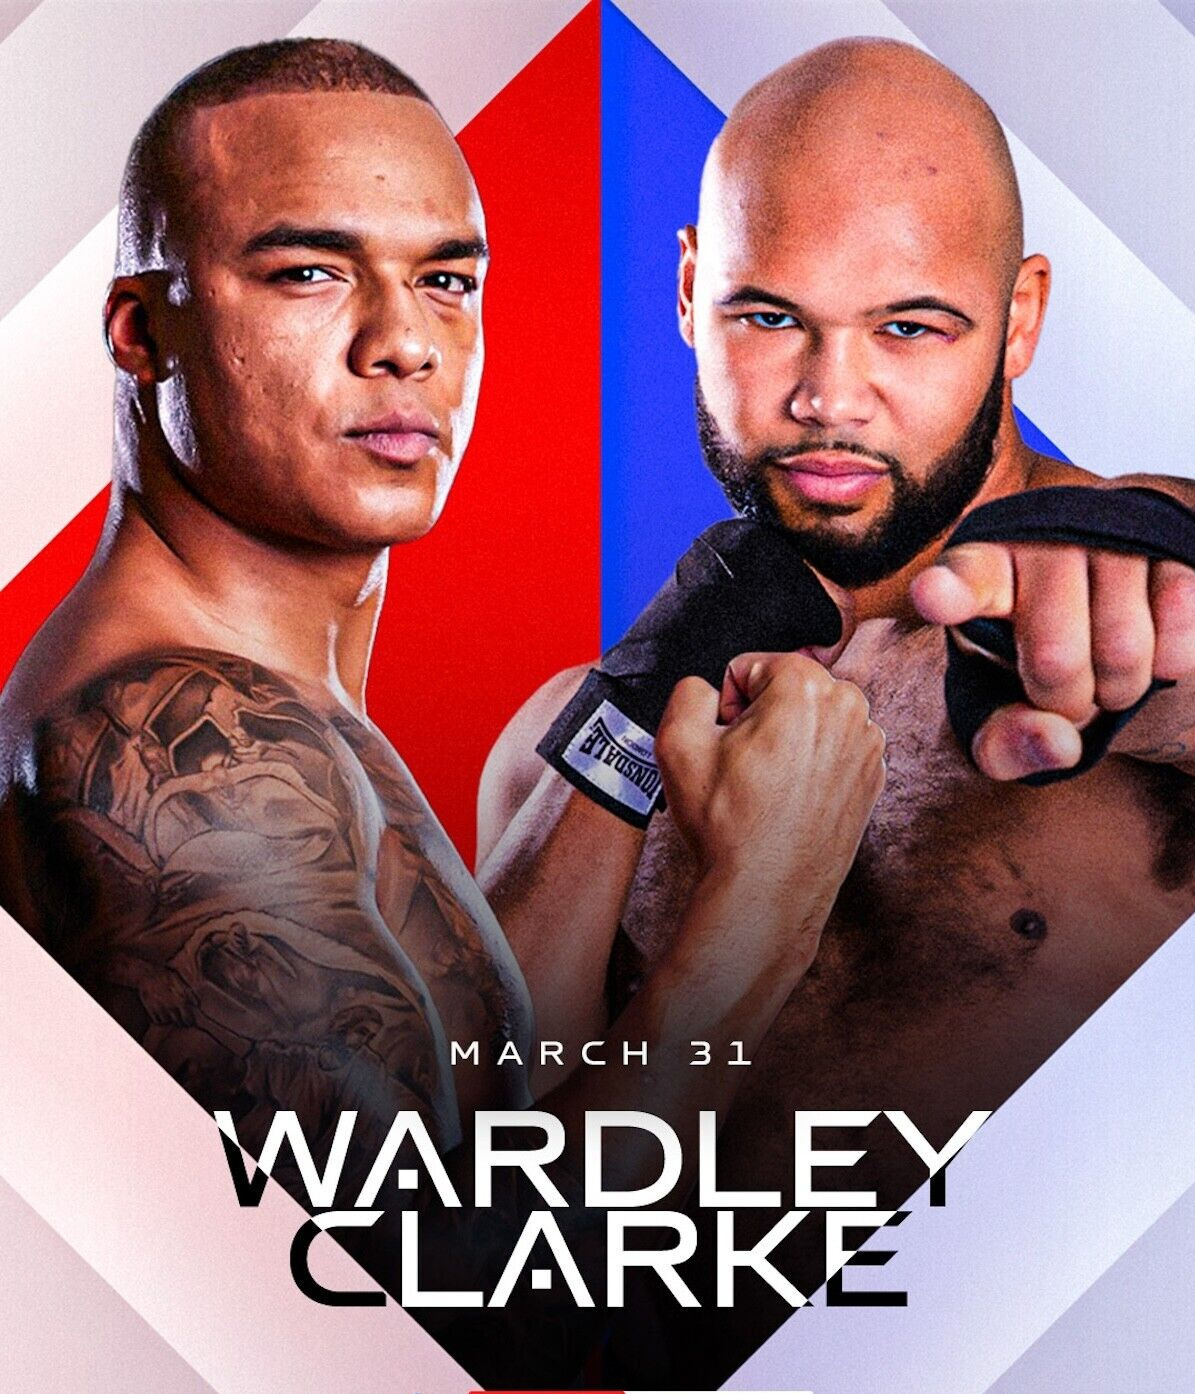 FABIO WARDLEY vs FRAZER CLARKE Boxing DVD